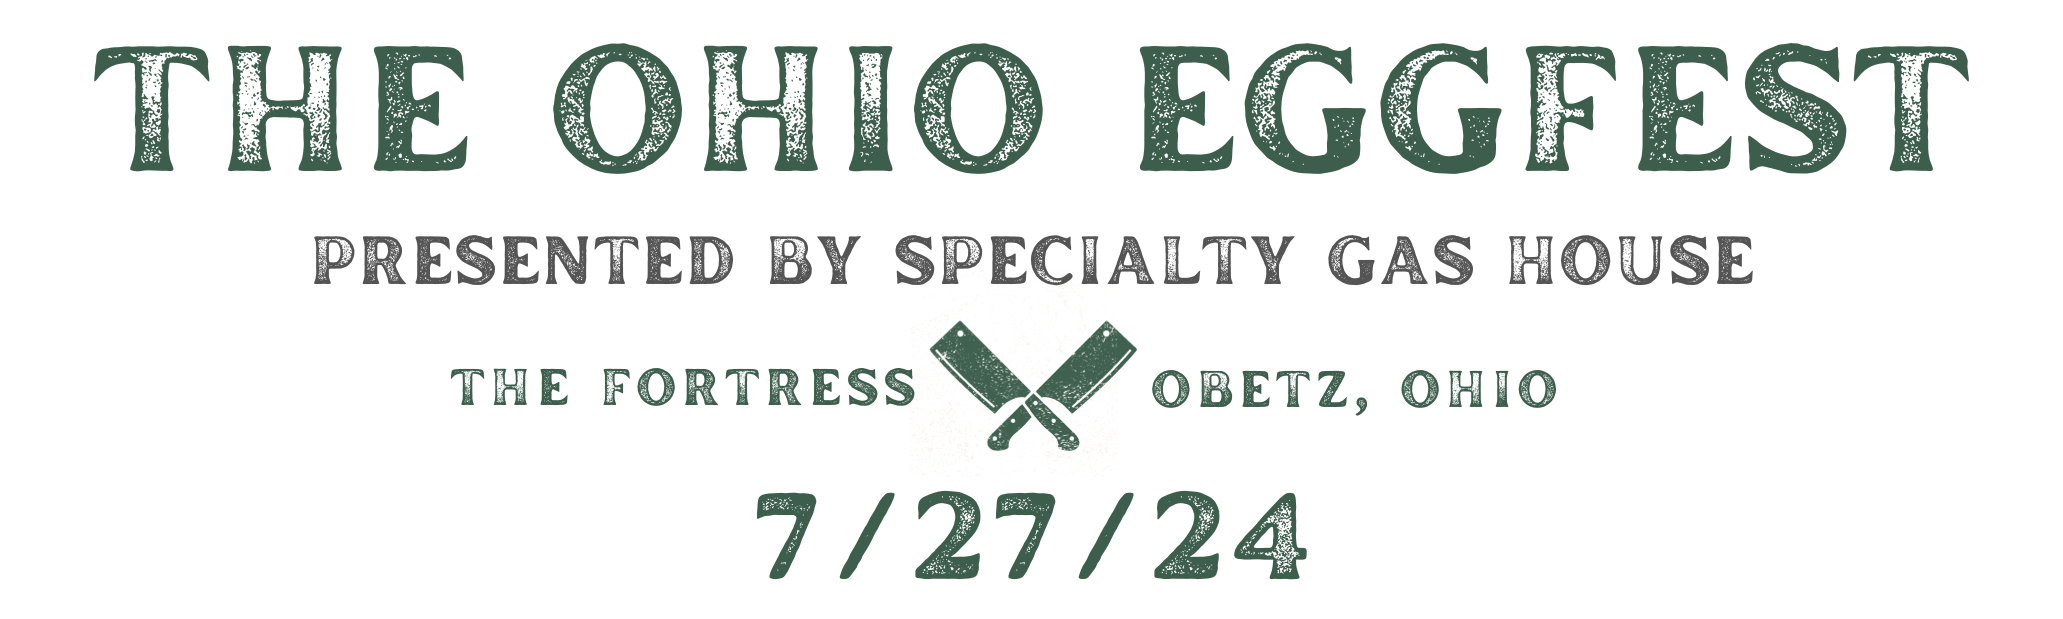 the ohio eggfest columbus ohio date and location big green egg festival